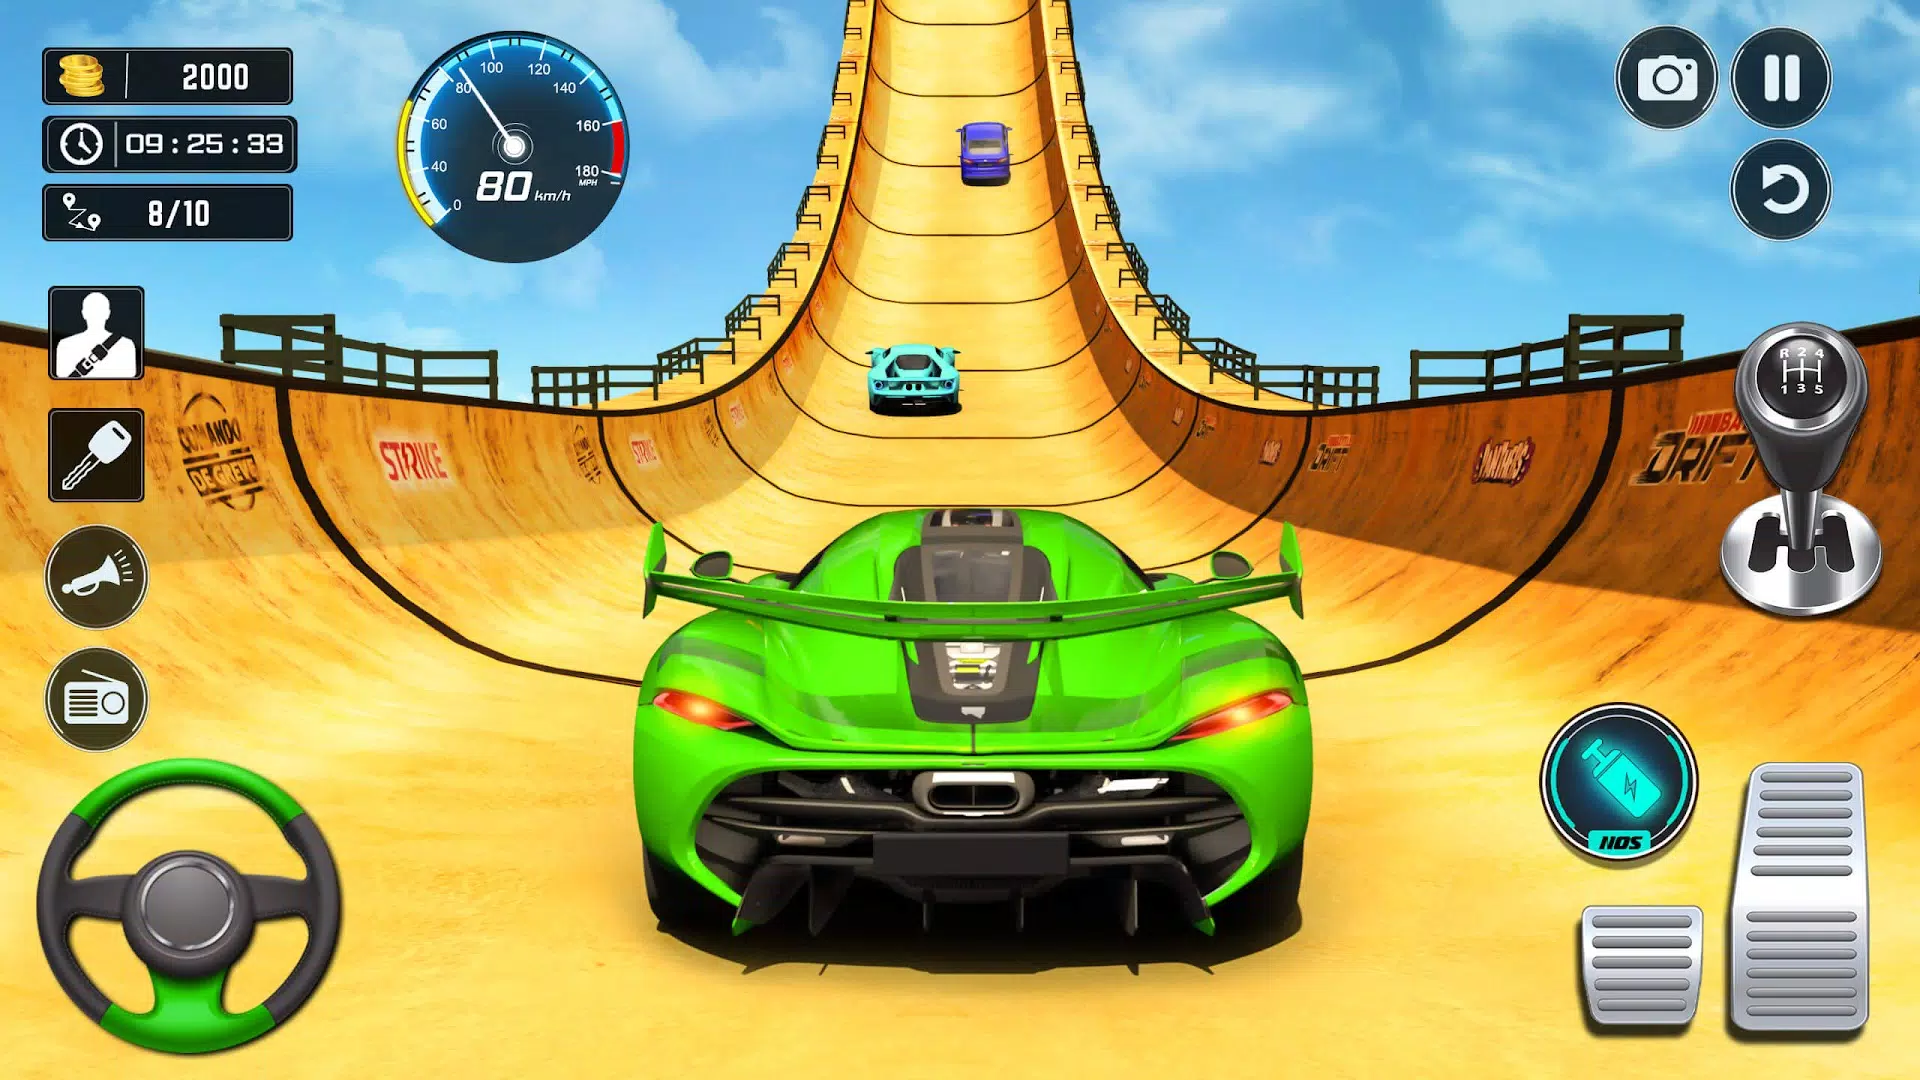 Jogos de Carros 3D 